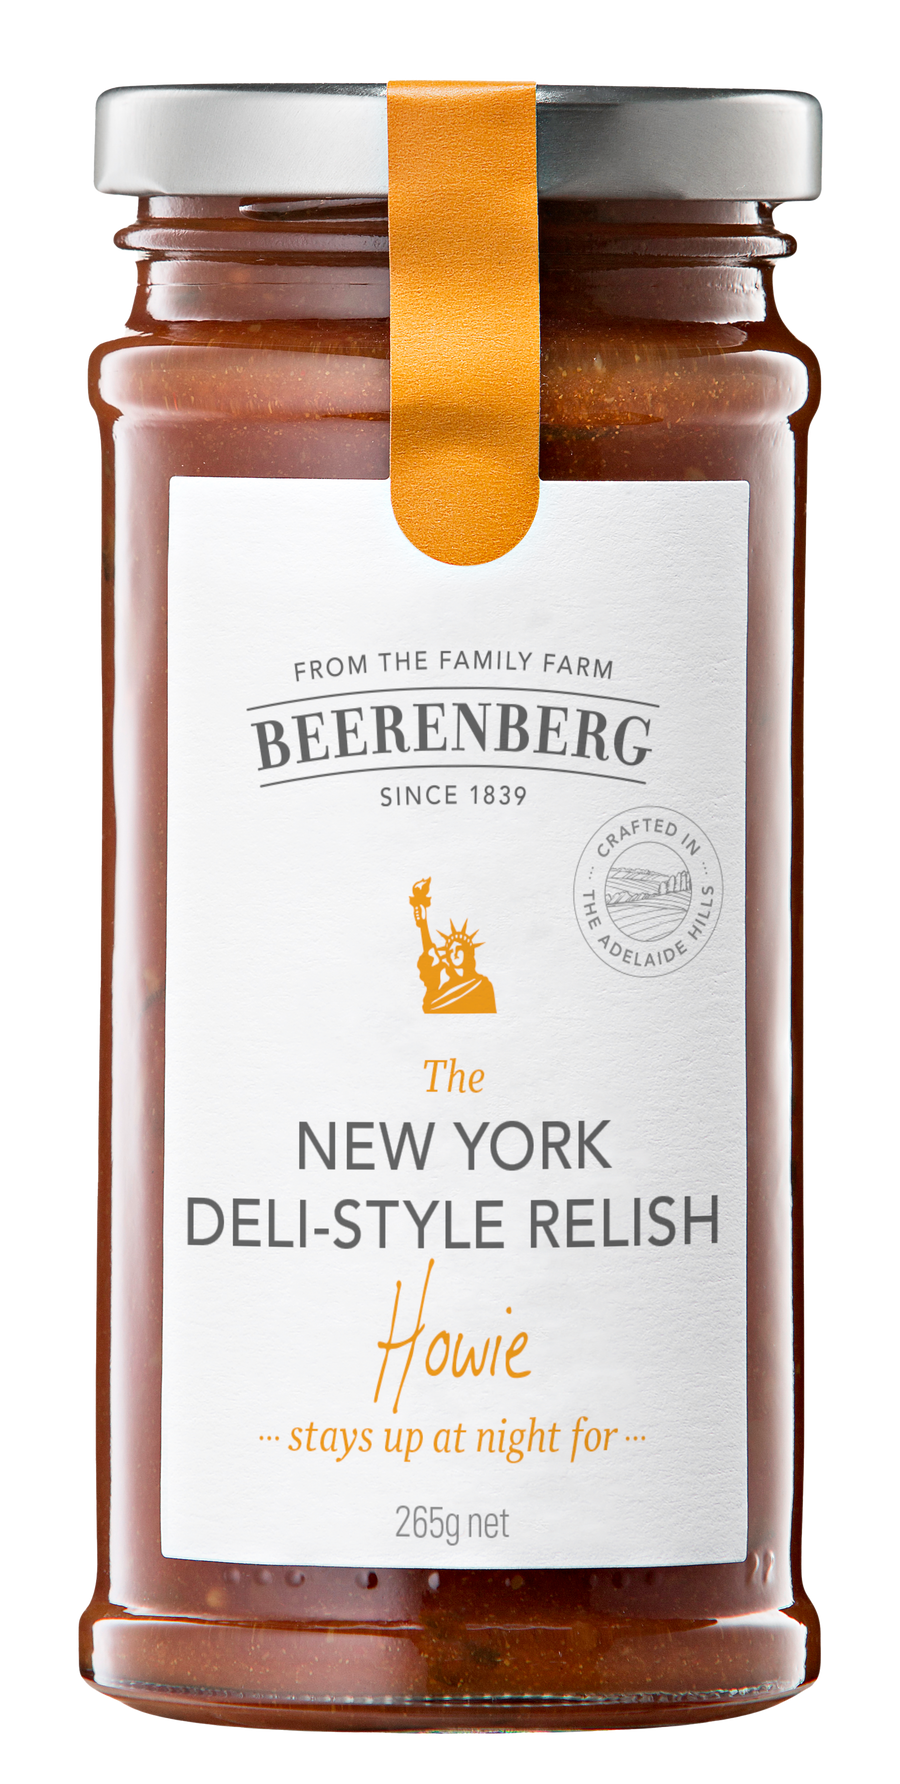 New York Deli-Style Relish